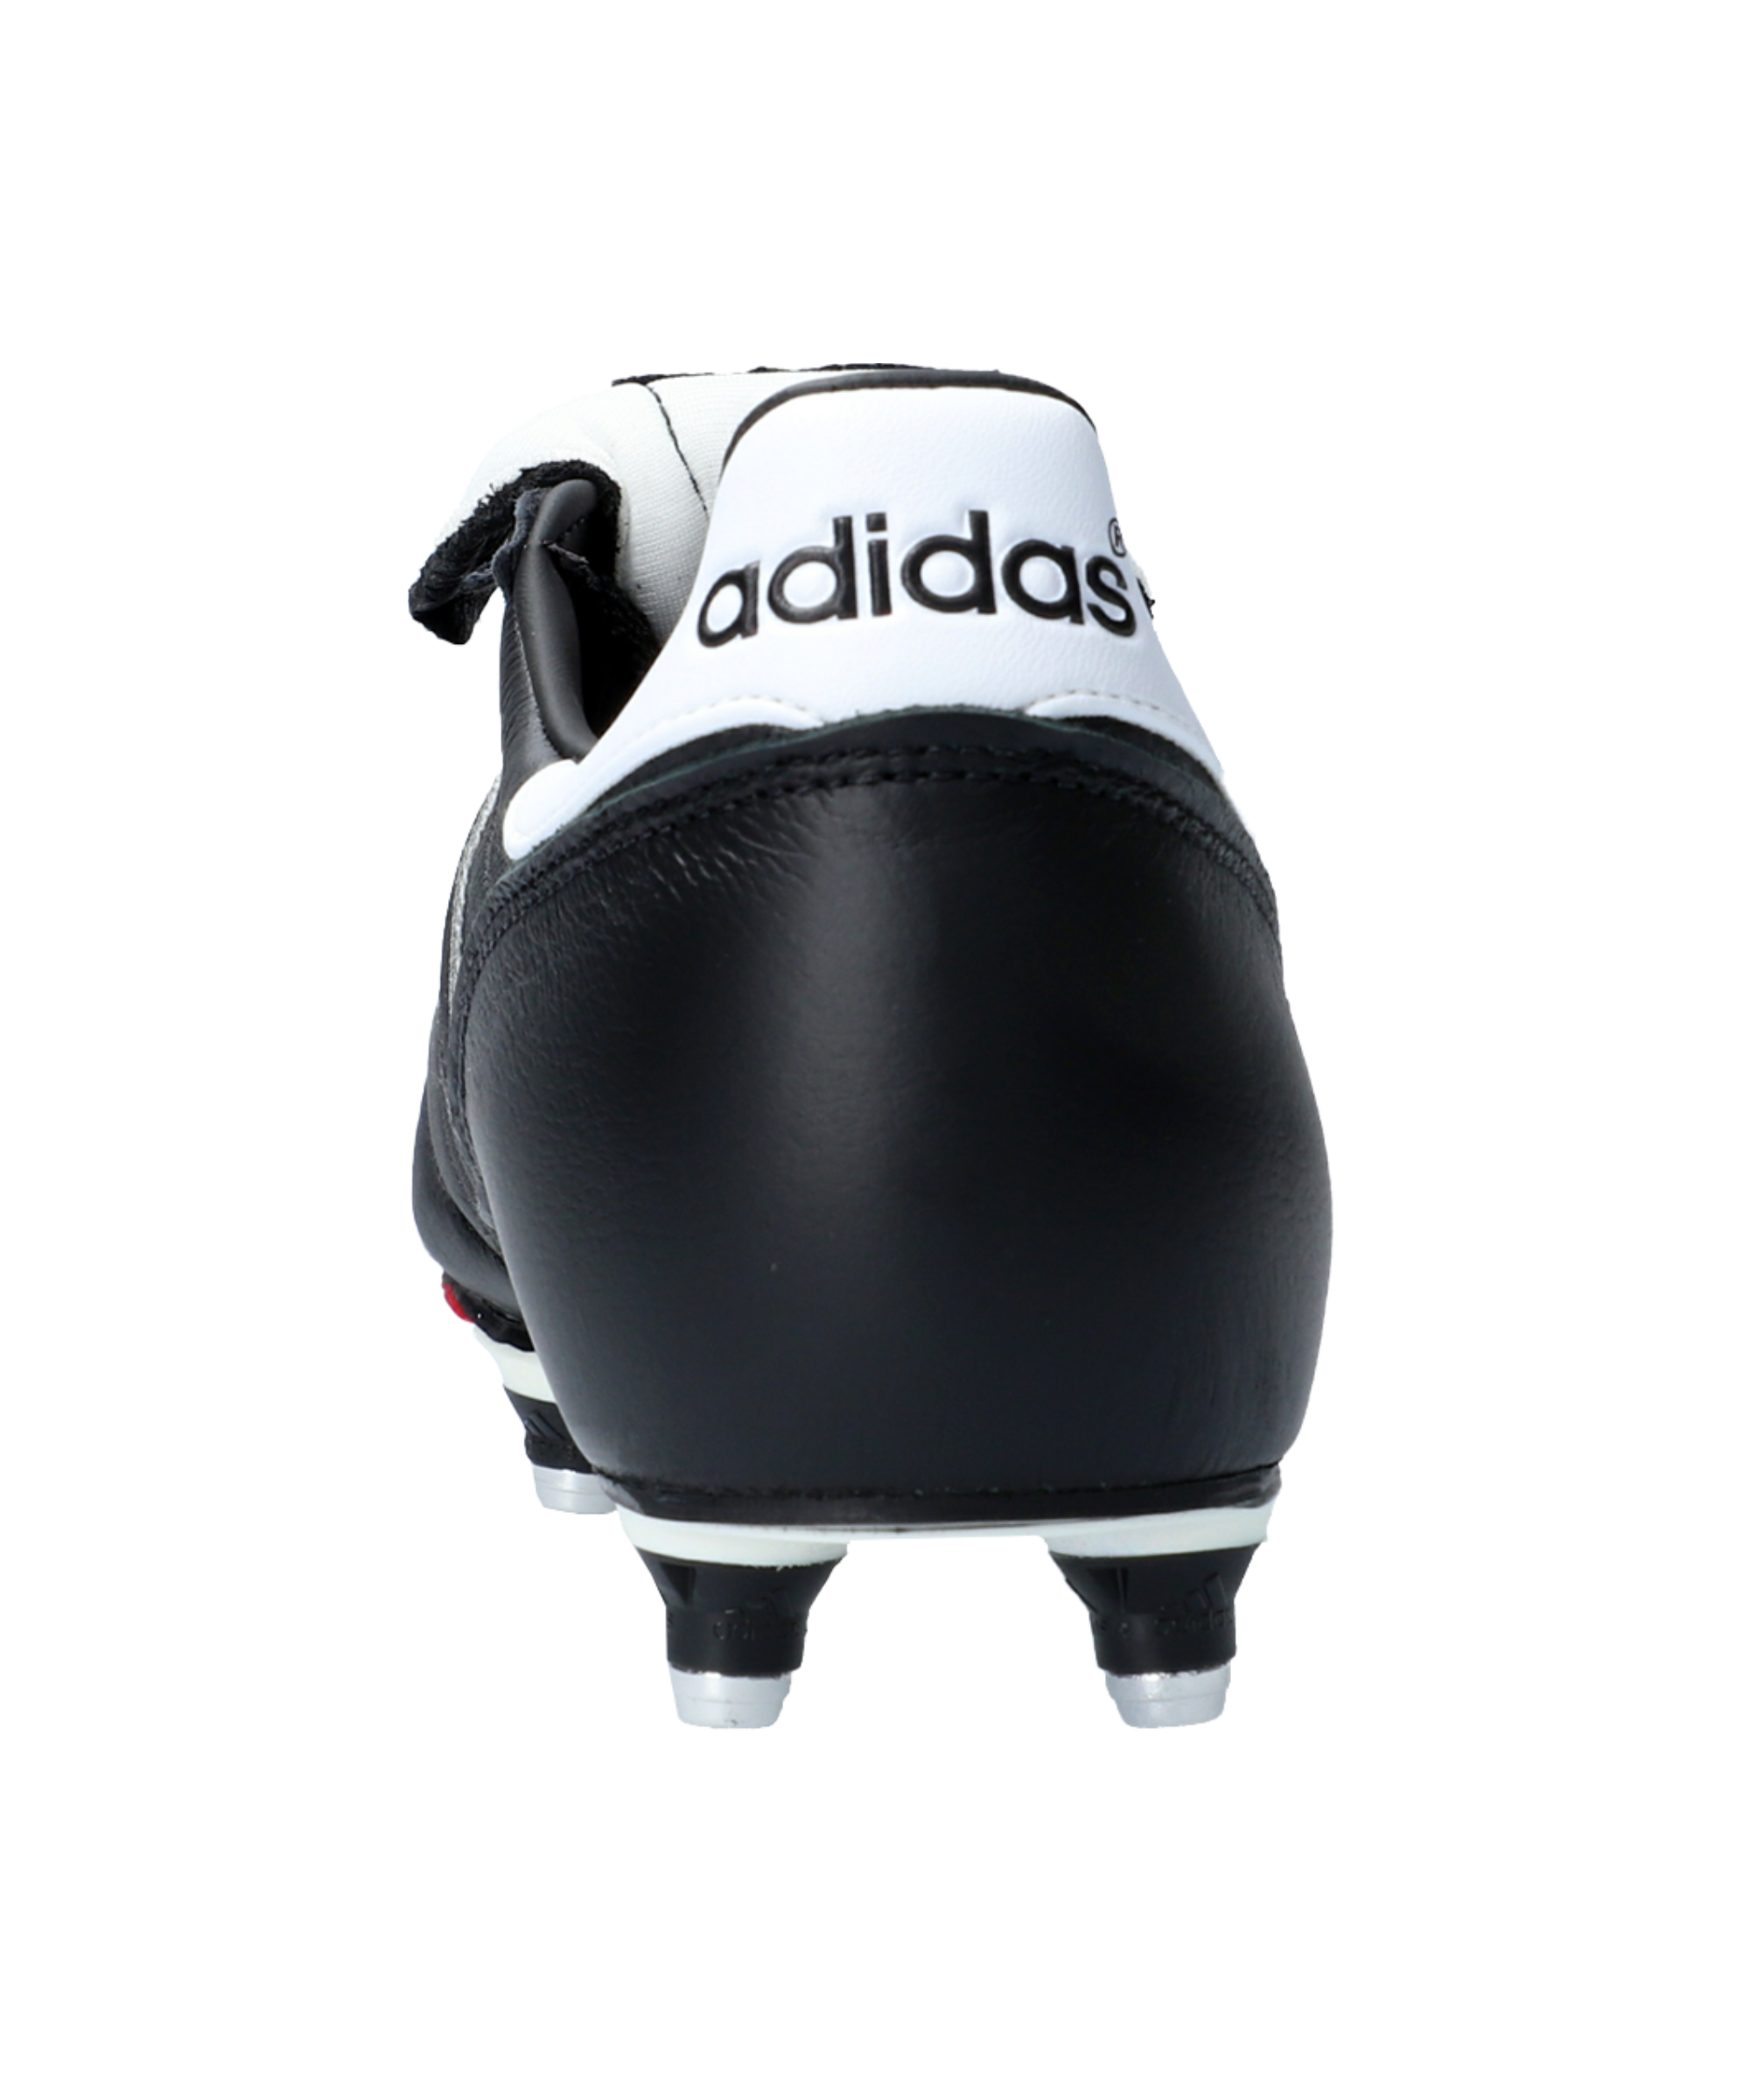 ensom klistermærke Memo adidas World Cup SG Black Stripes